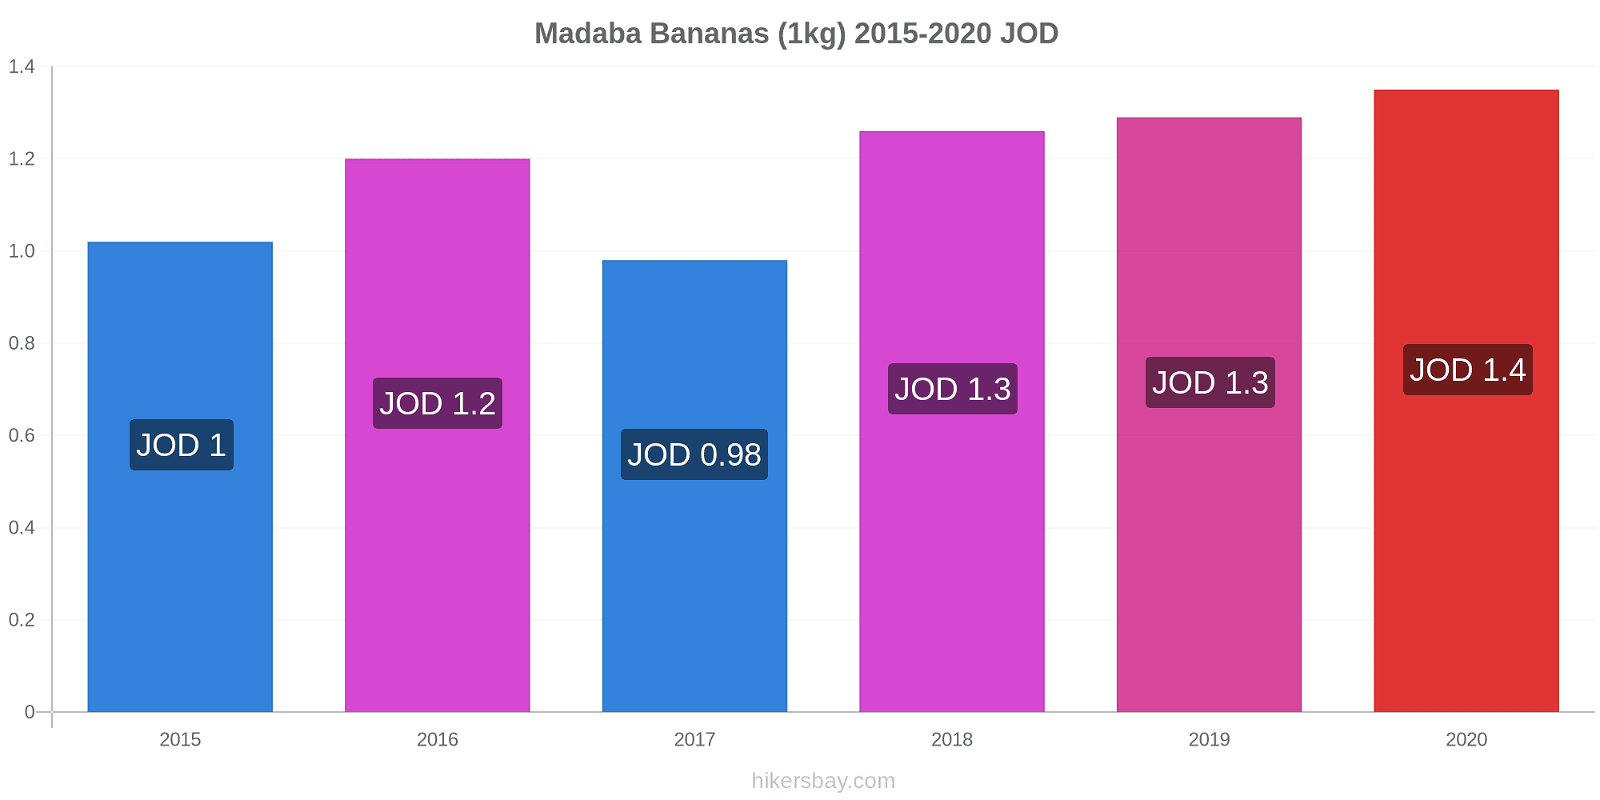 Madaba price changes Bananas (1kg) hikersbay.com